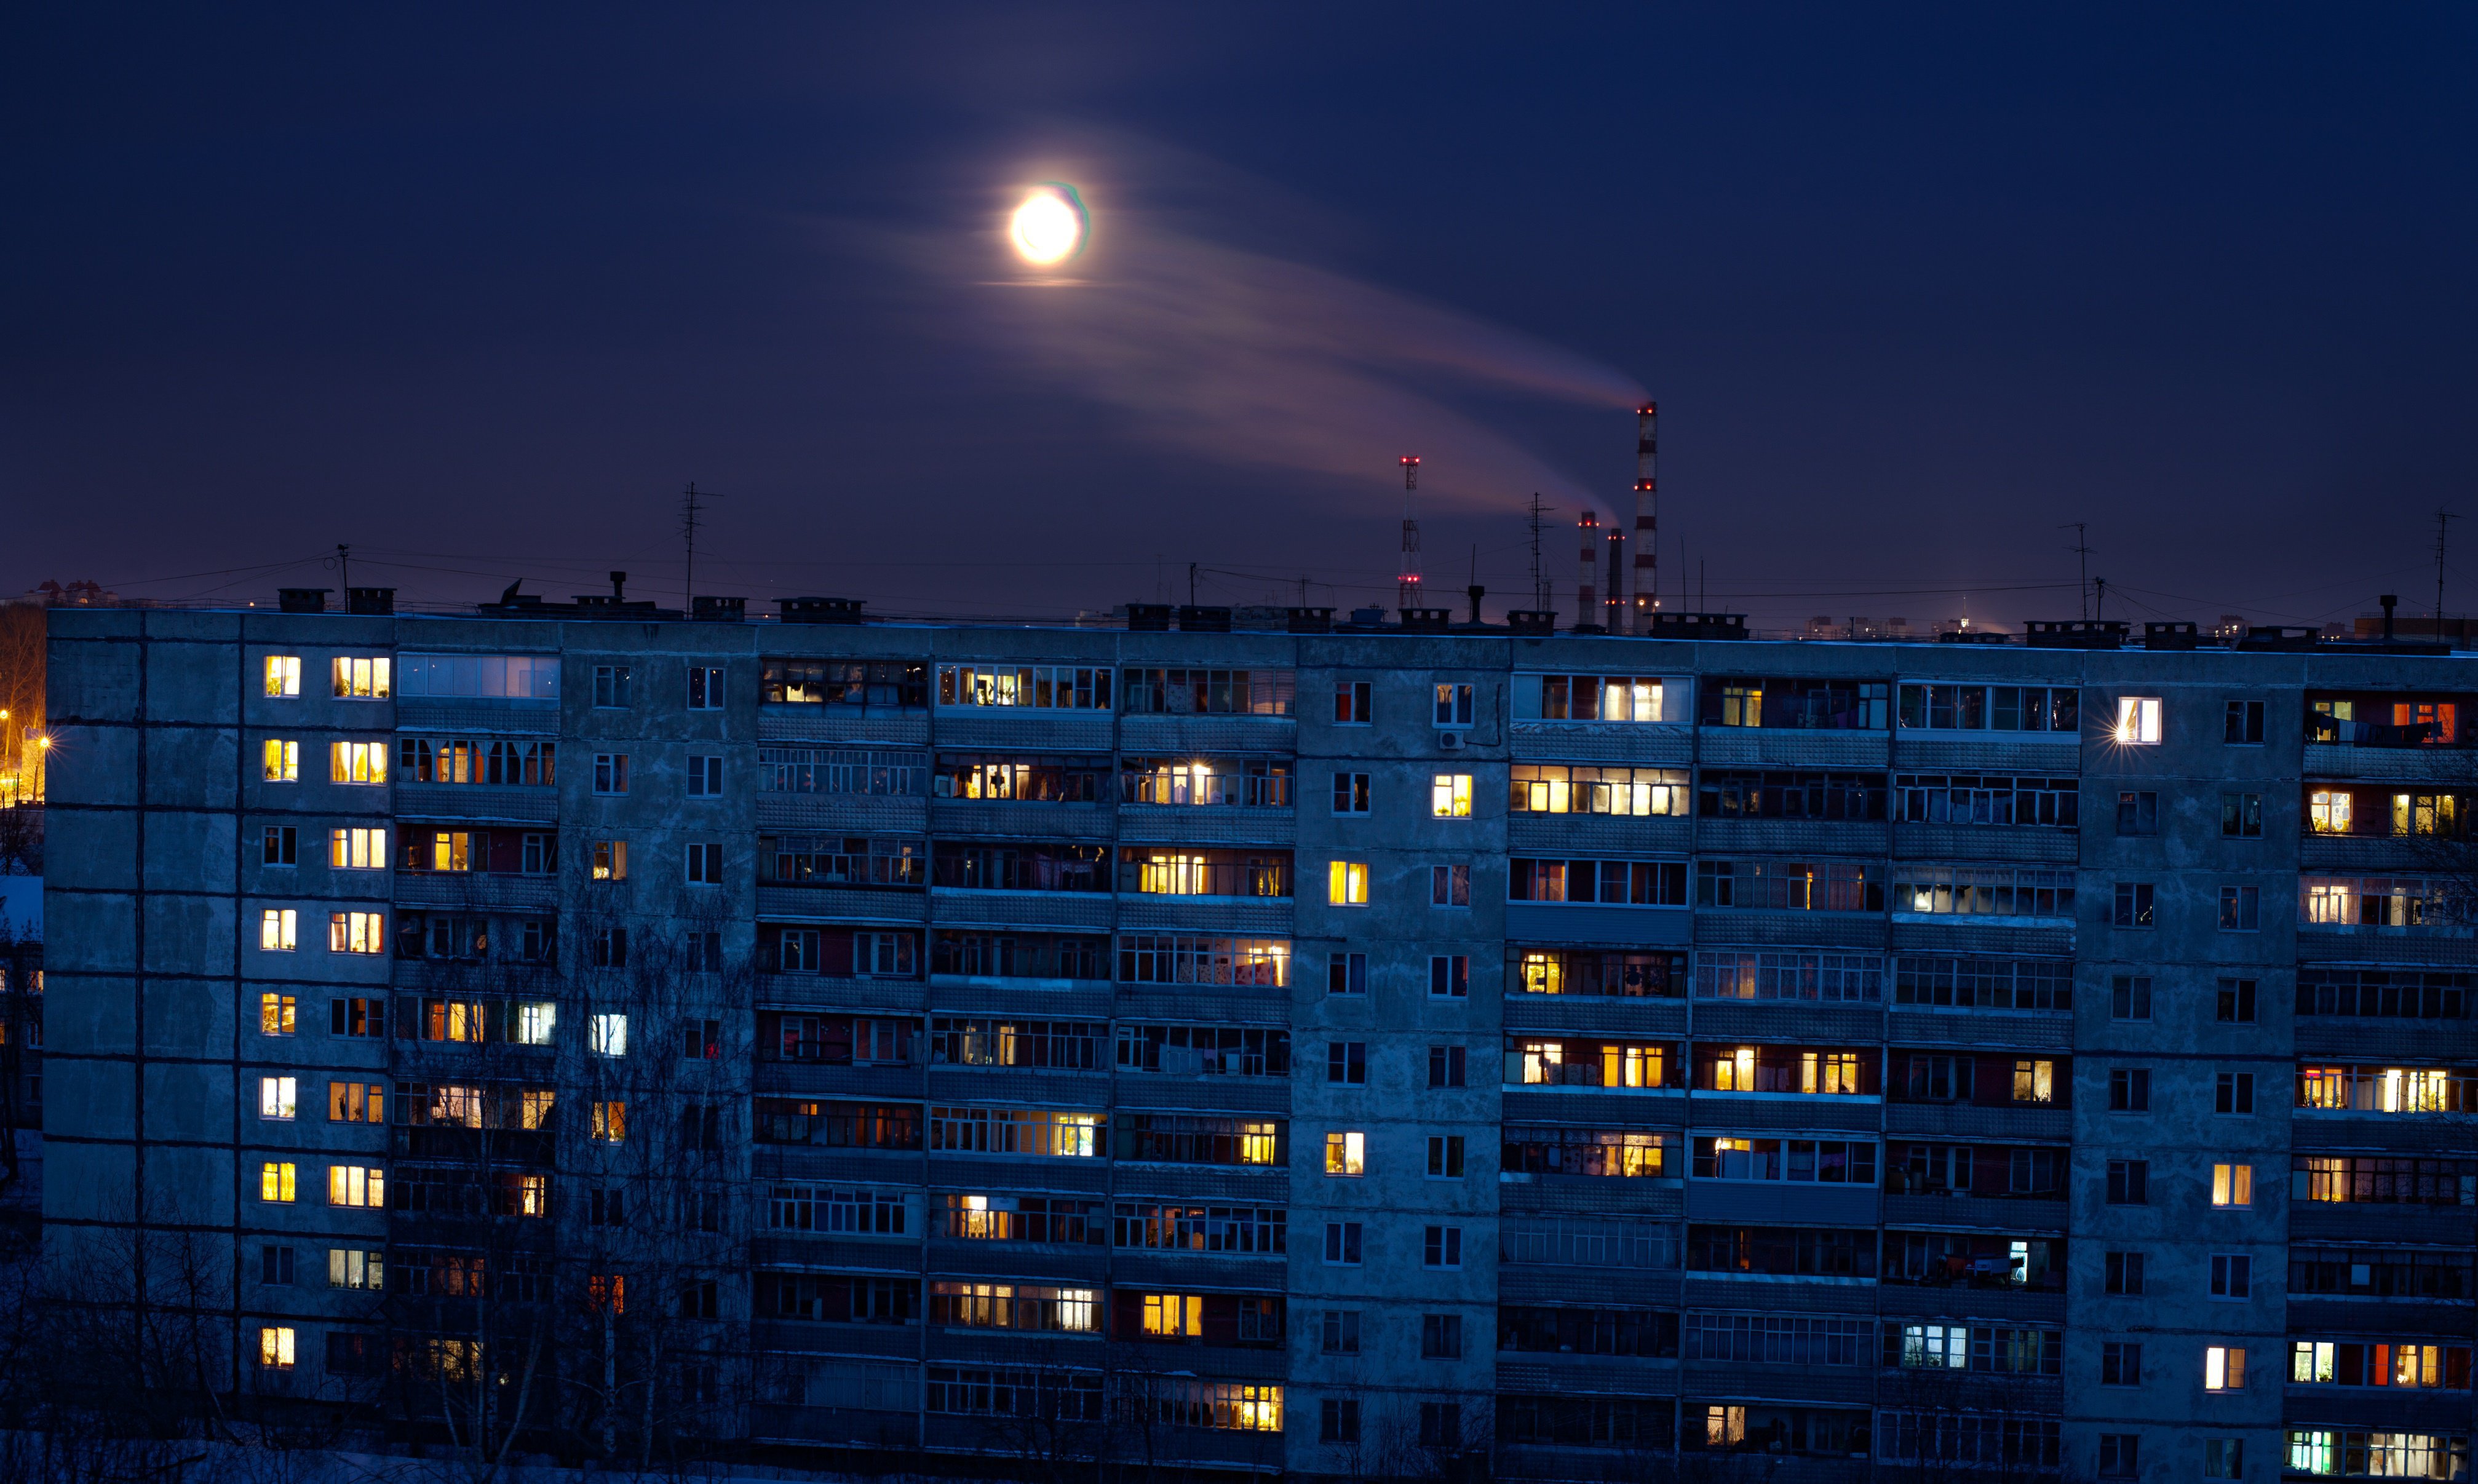 Night Sky Building Lights Russia Block Of Flats 4029x2413